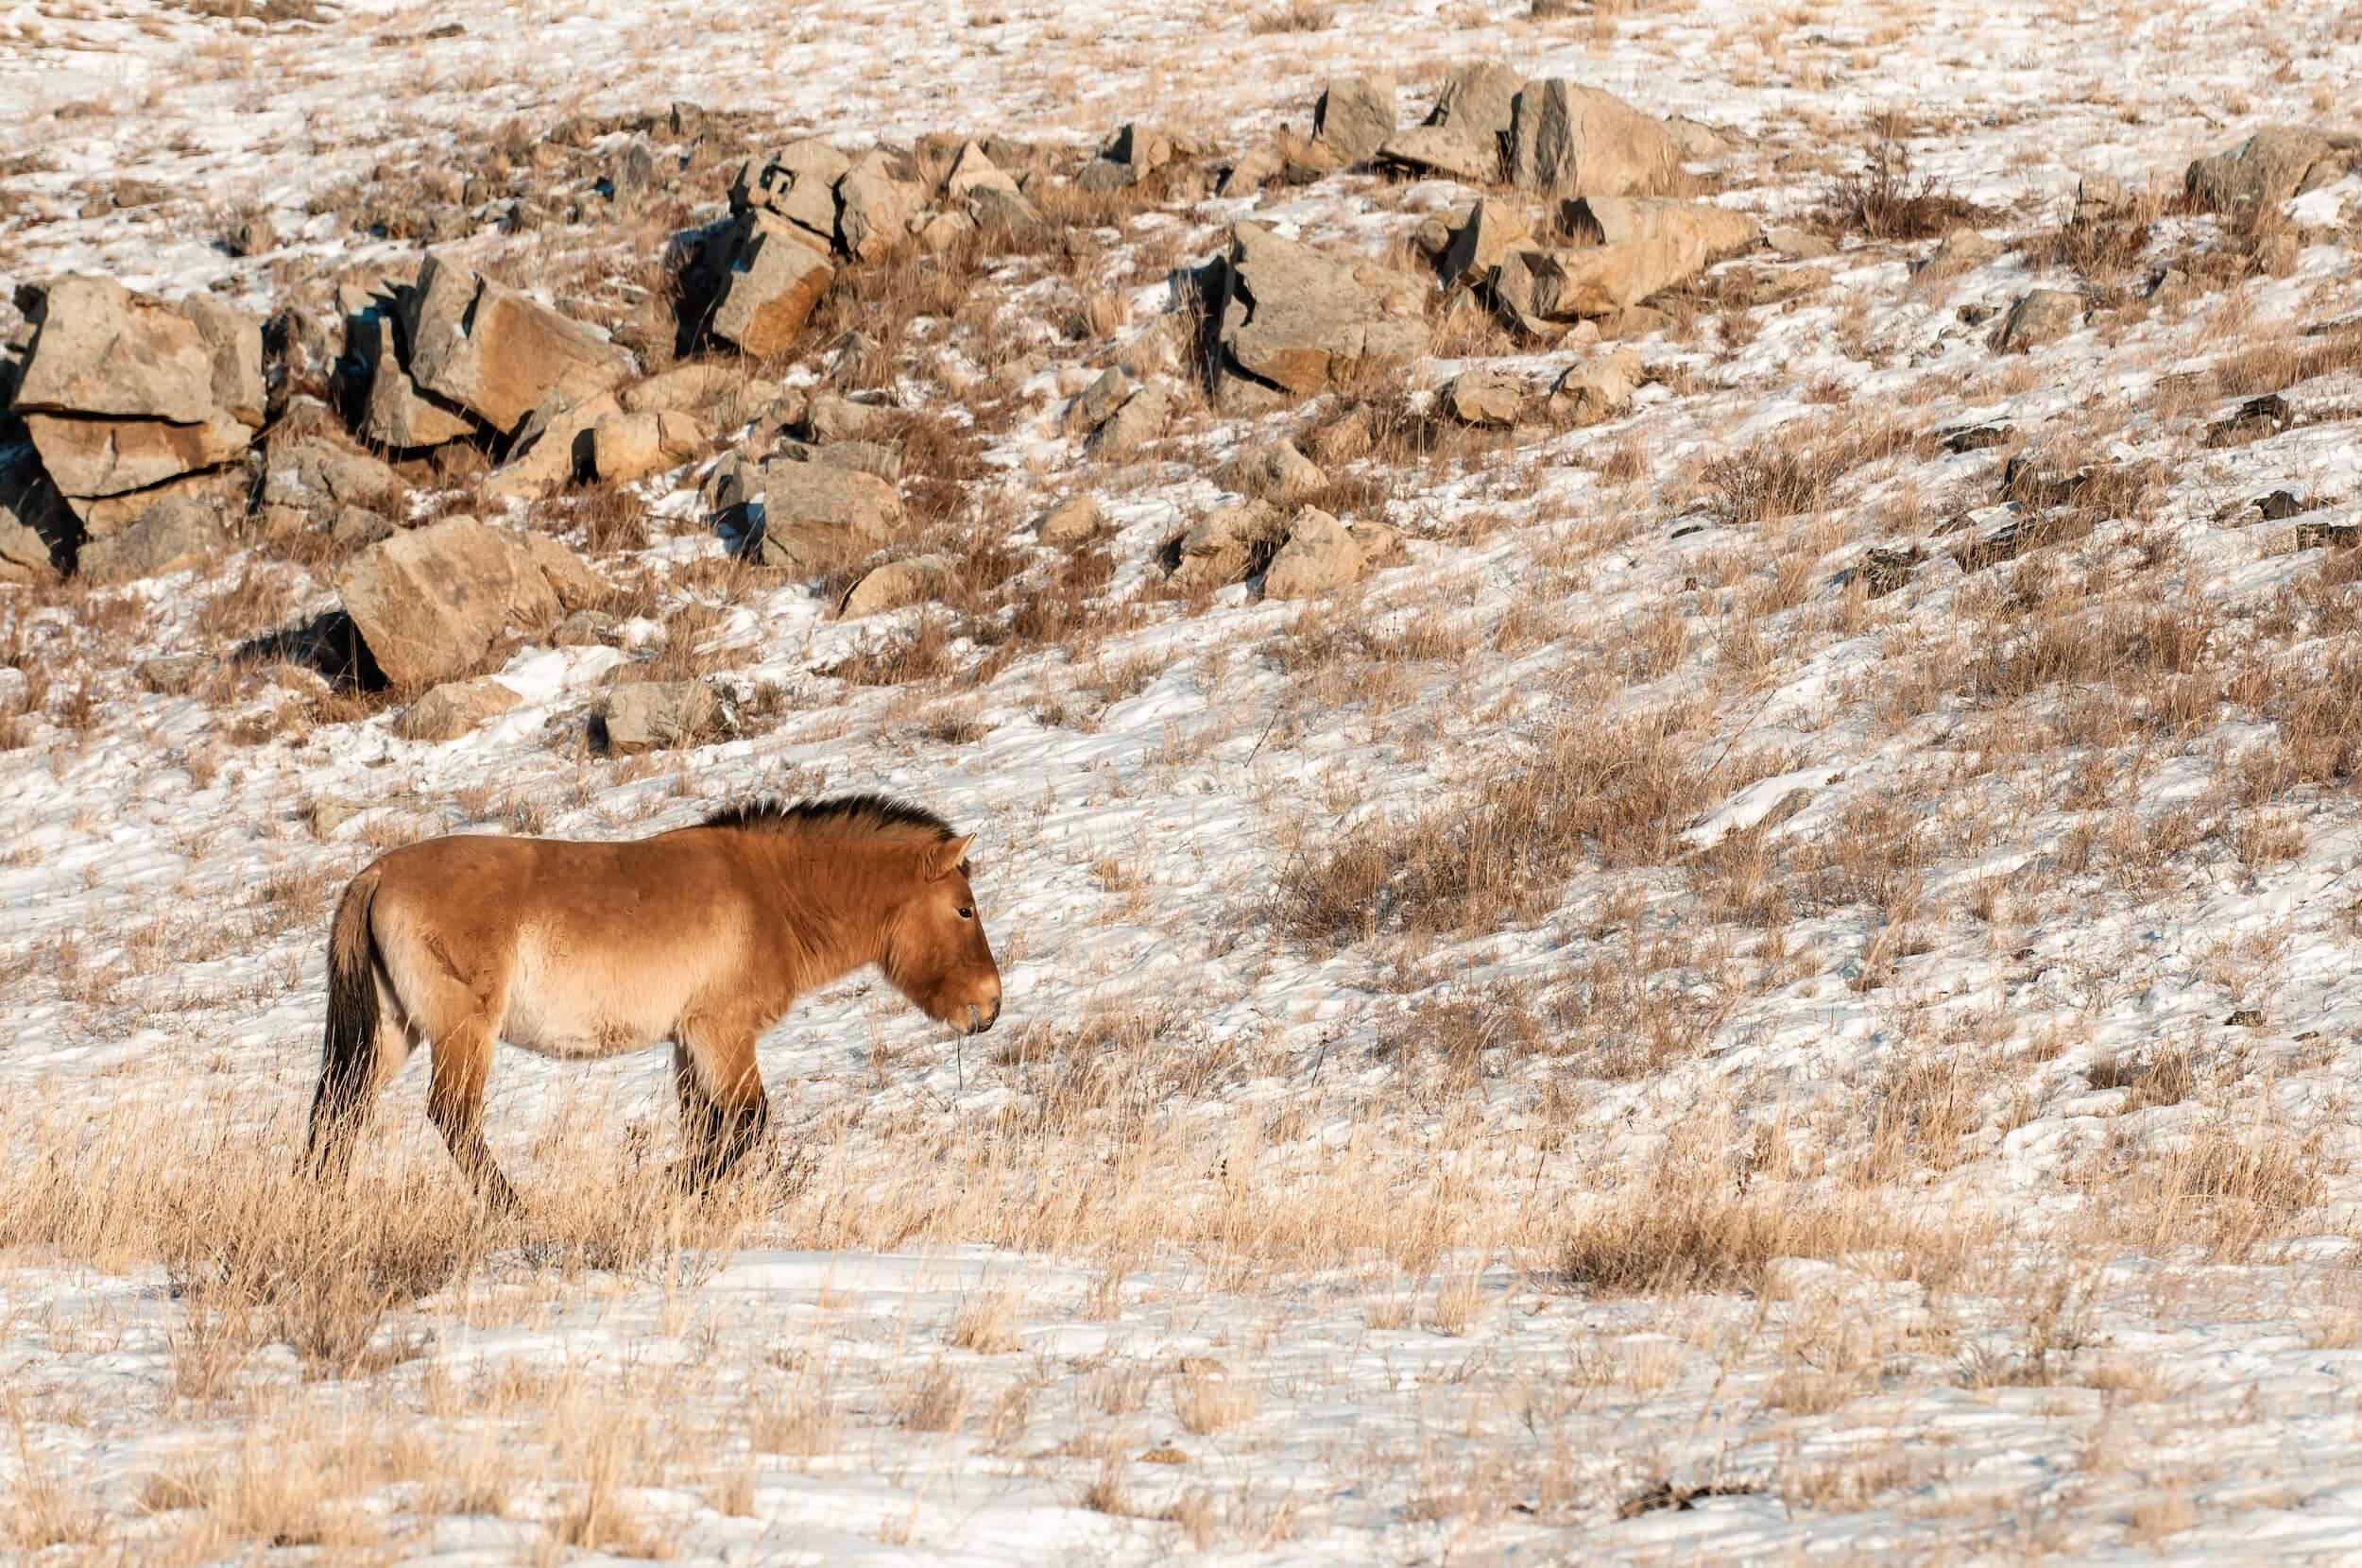 Profile of a mature Przewalski stallion against a rocky outcrop. Photographer: Astrid Harrisson. Location: Mongolia.